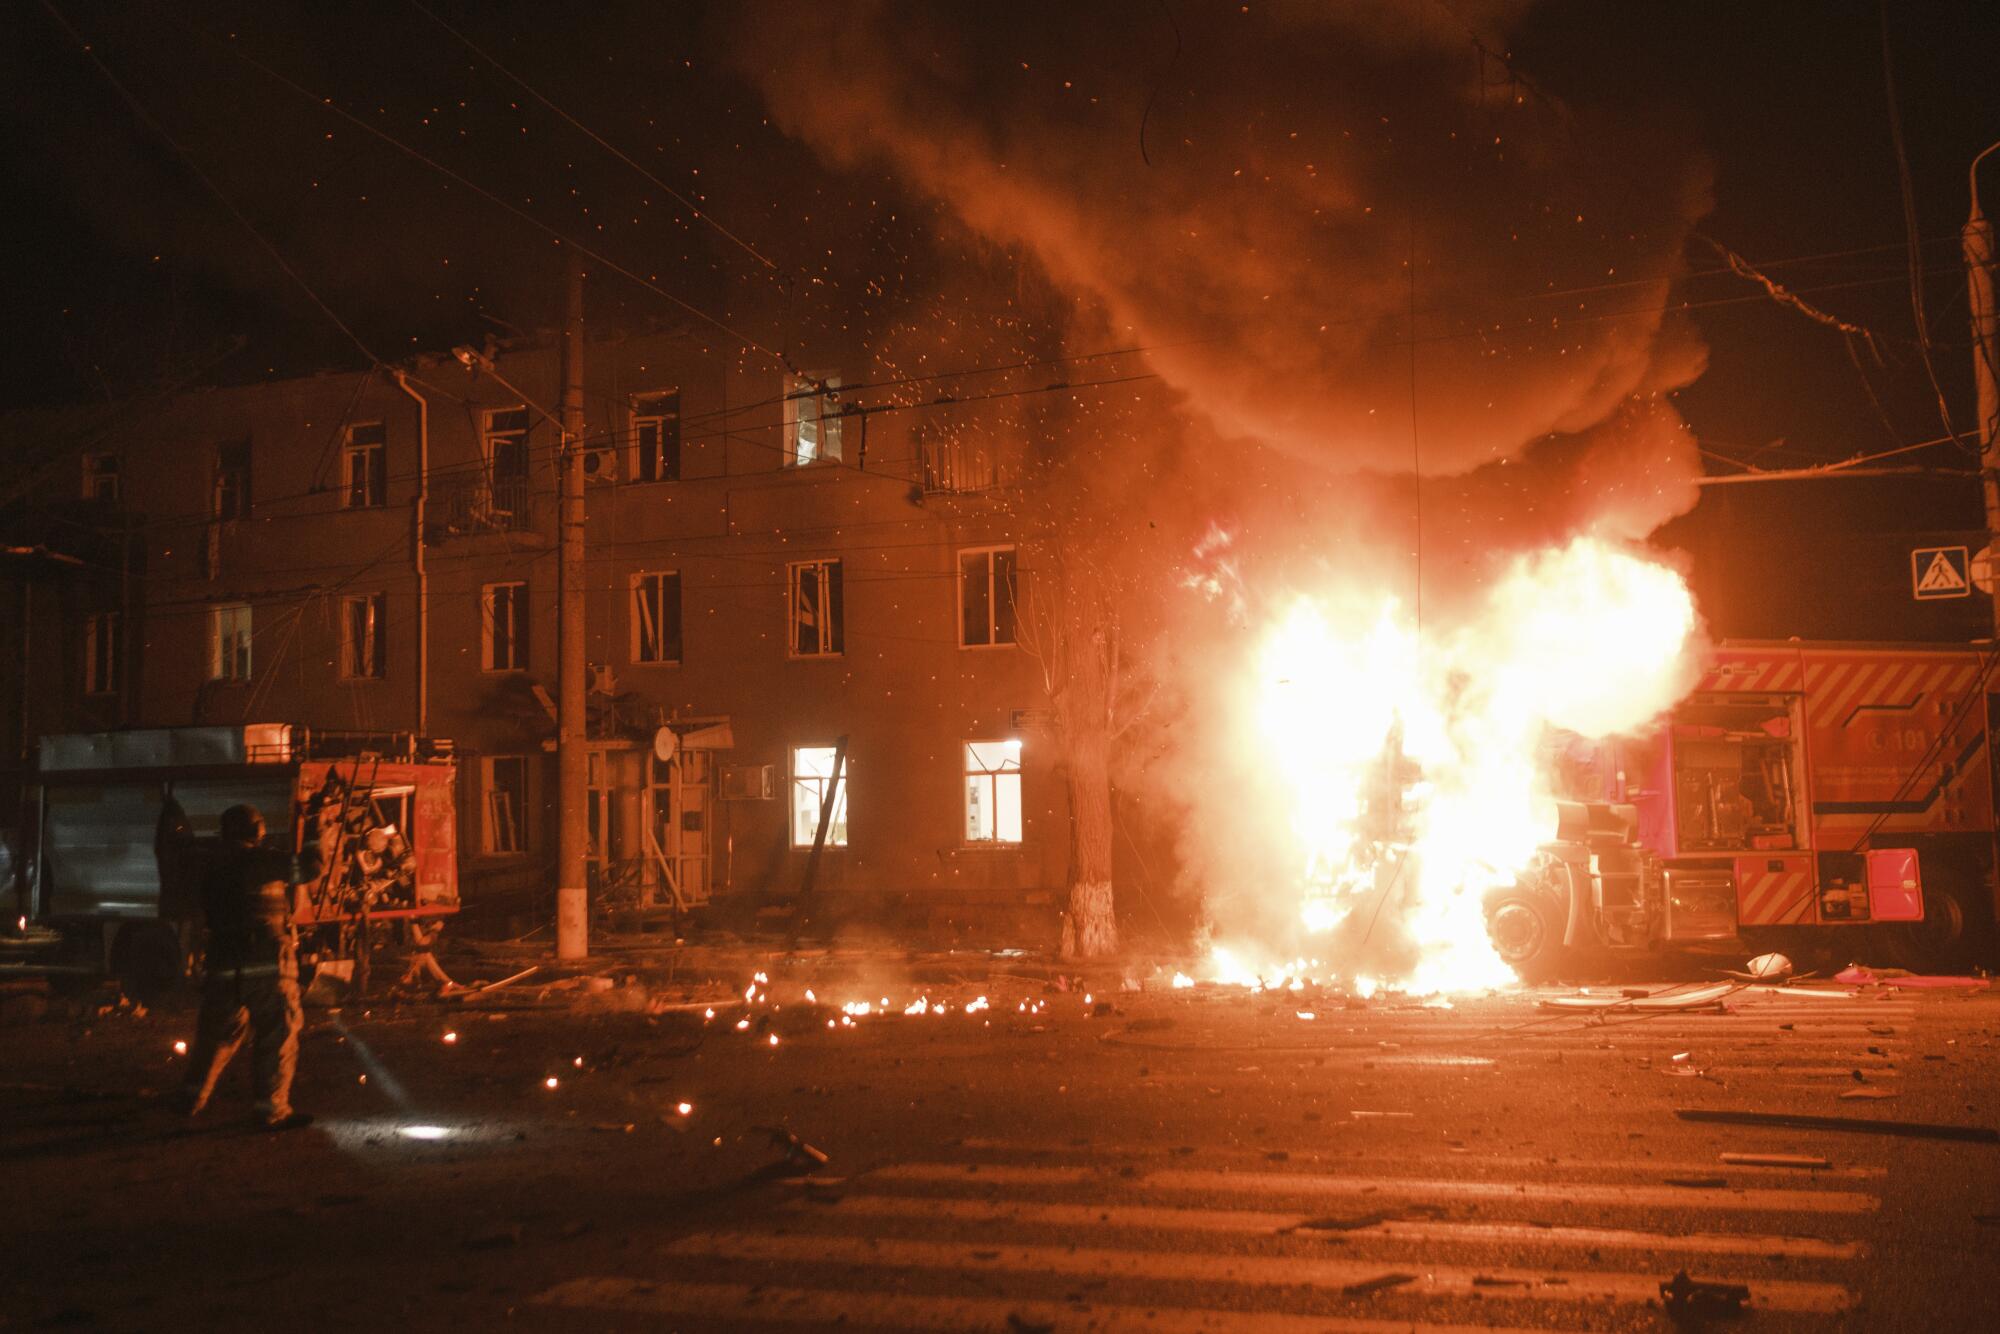 A fireball erupts near buildings at night.